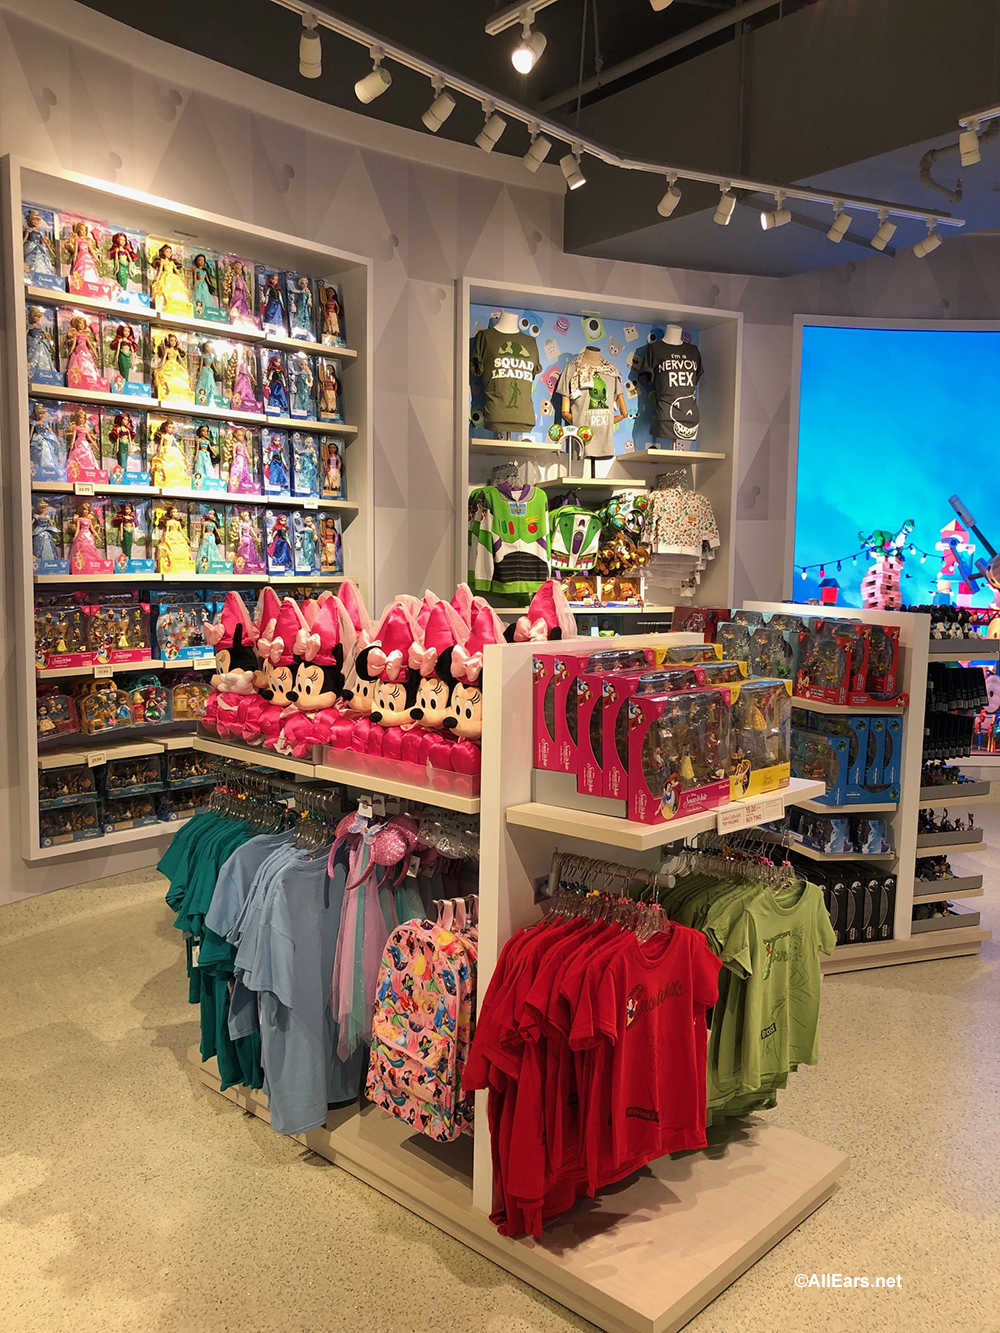 Photo Tour: Recently Renovated Disney Store in Orlando ...